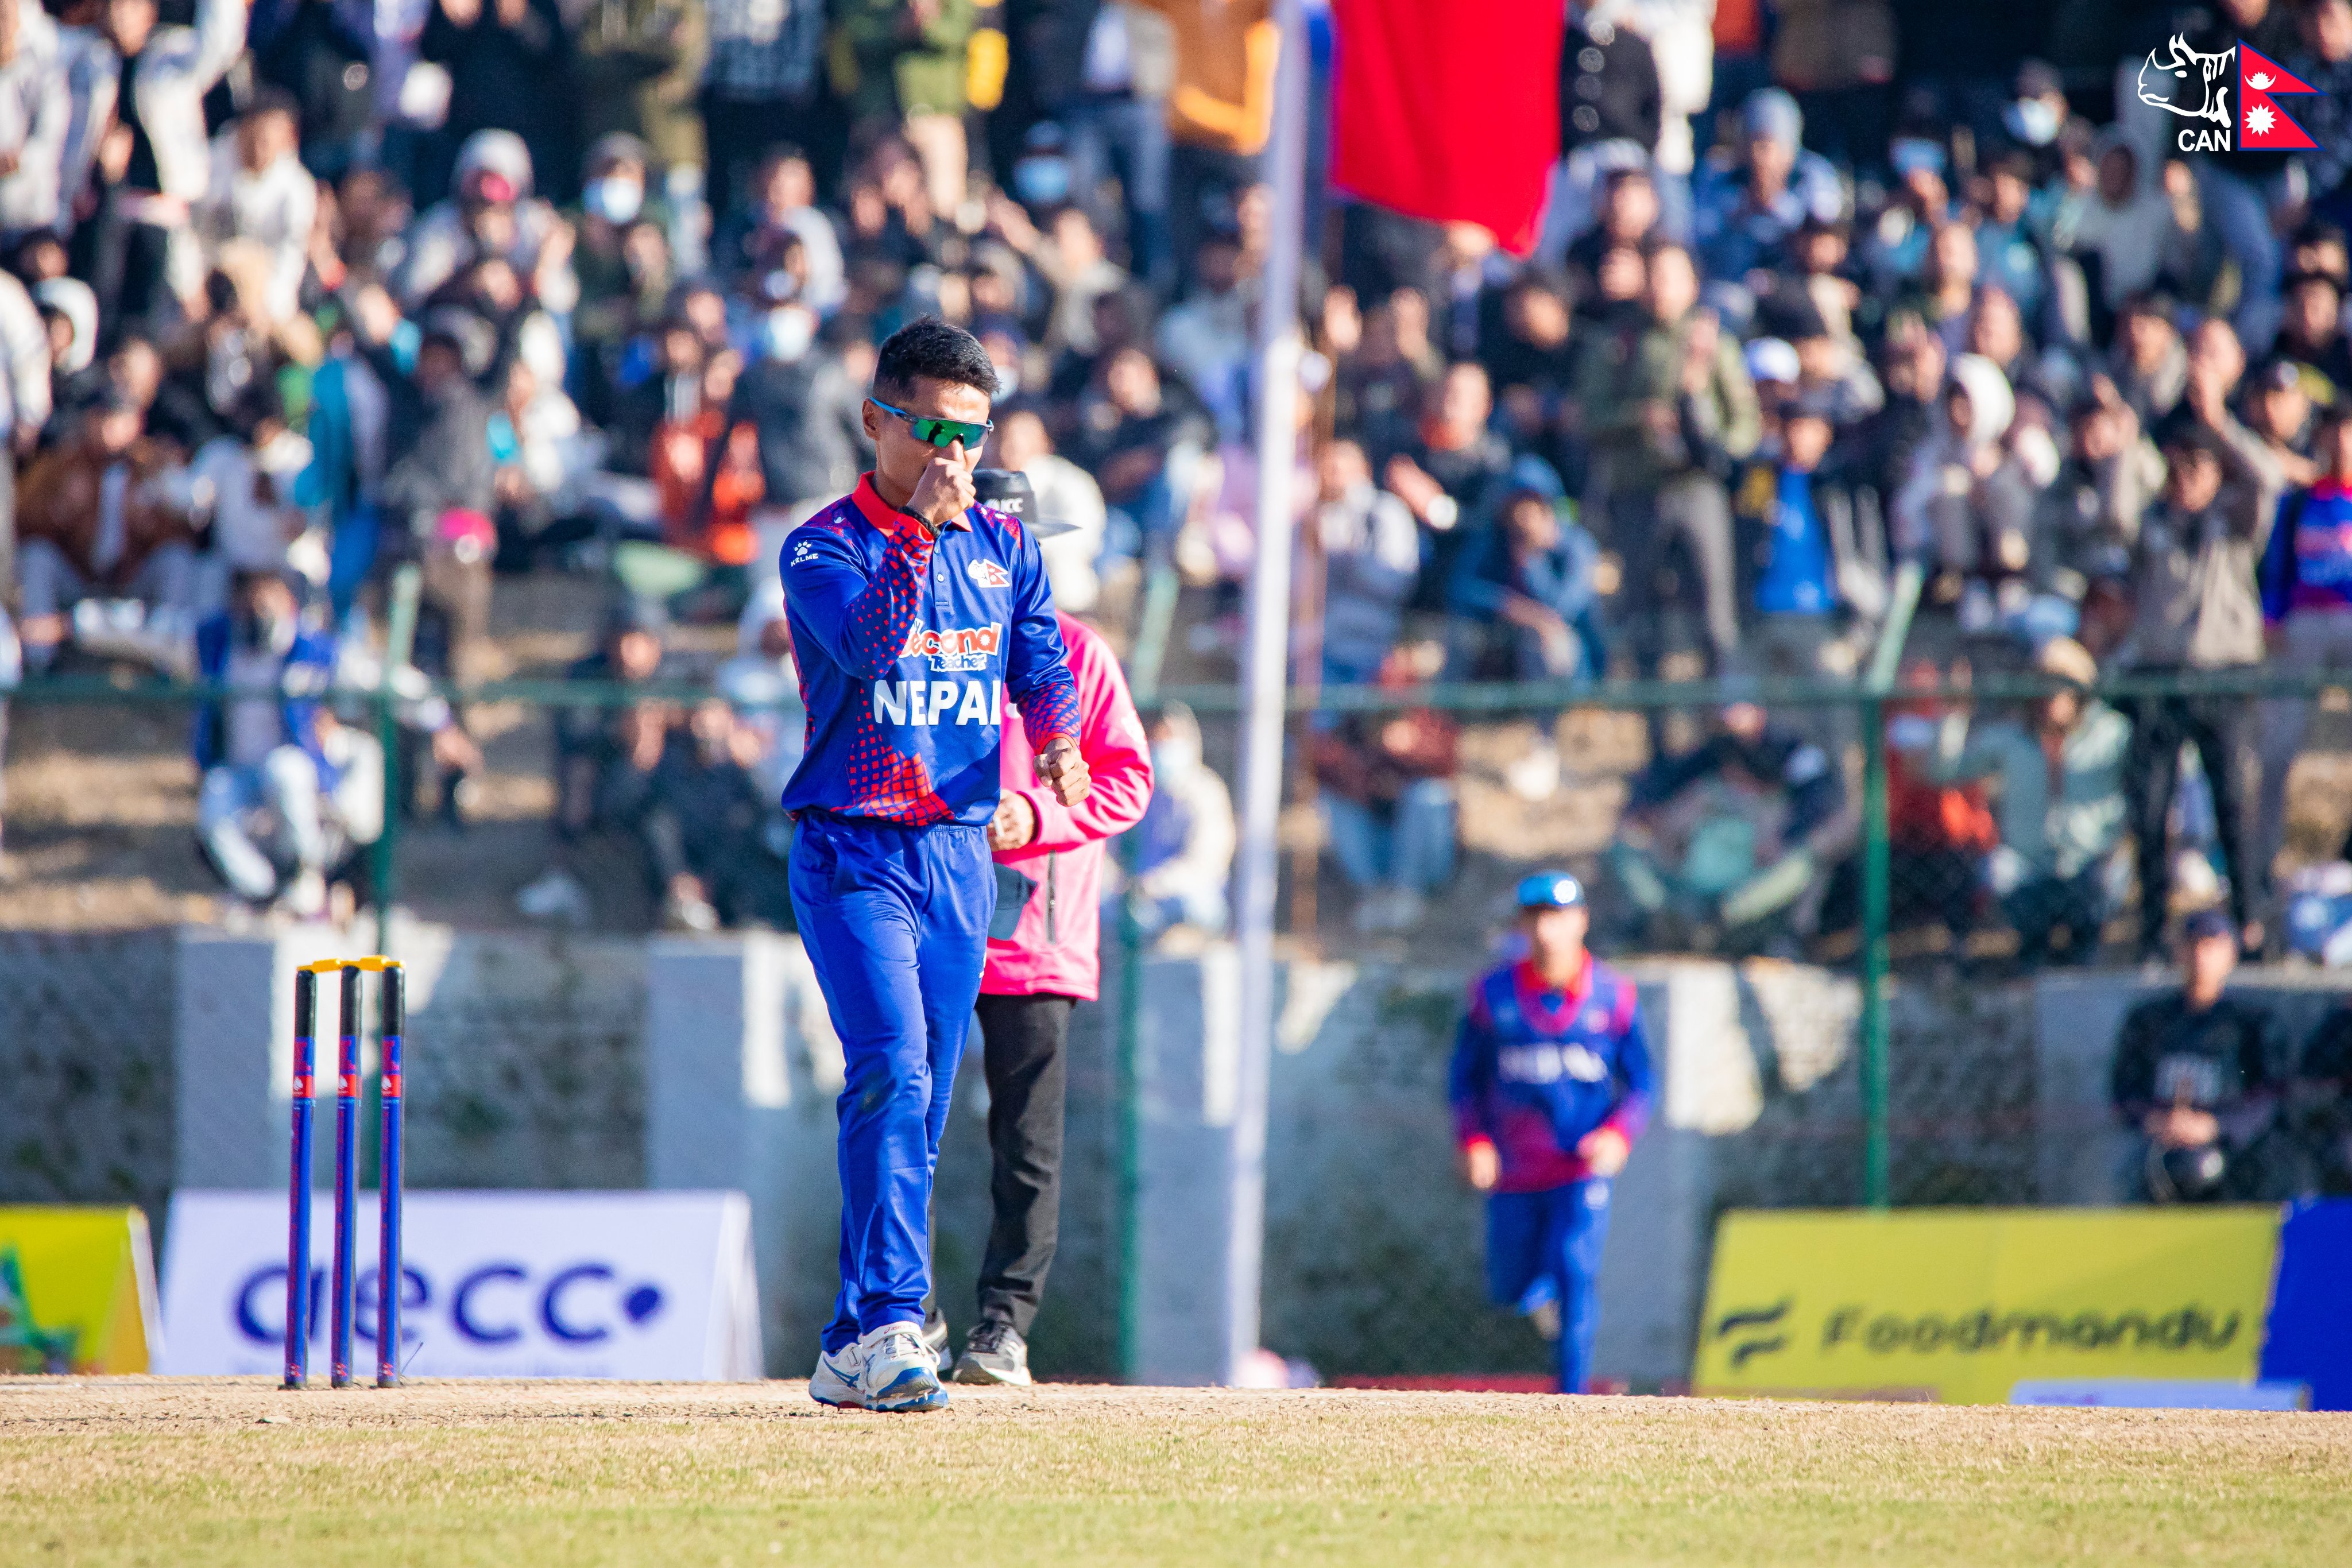 Nepal triumphs over Canada in thrilling Bilateral ODI Series opener